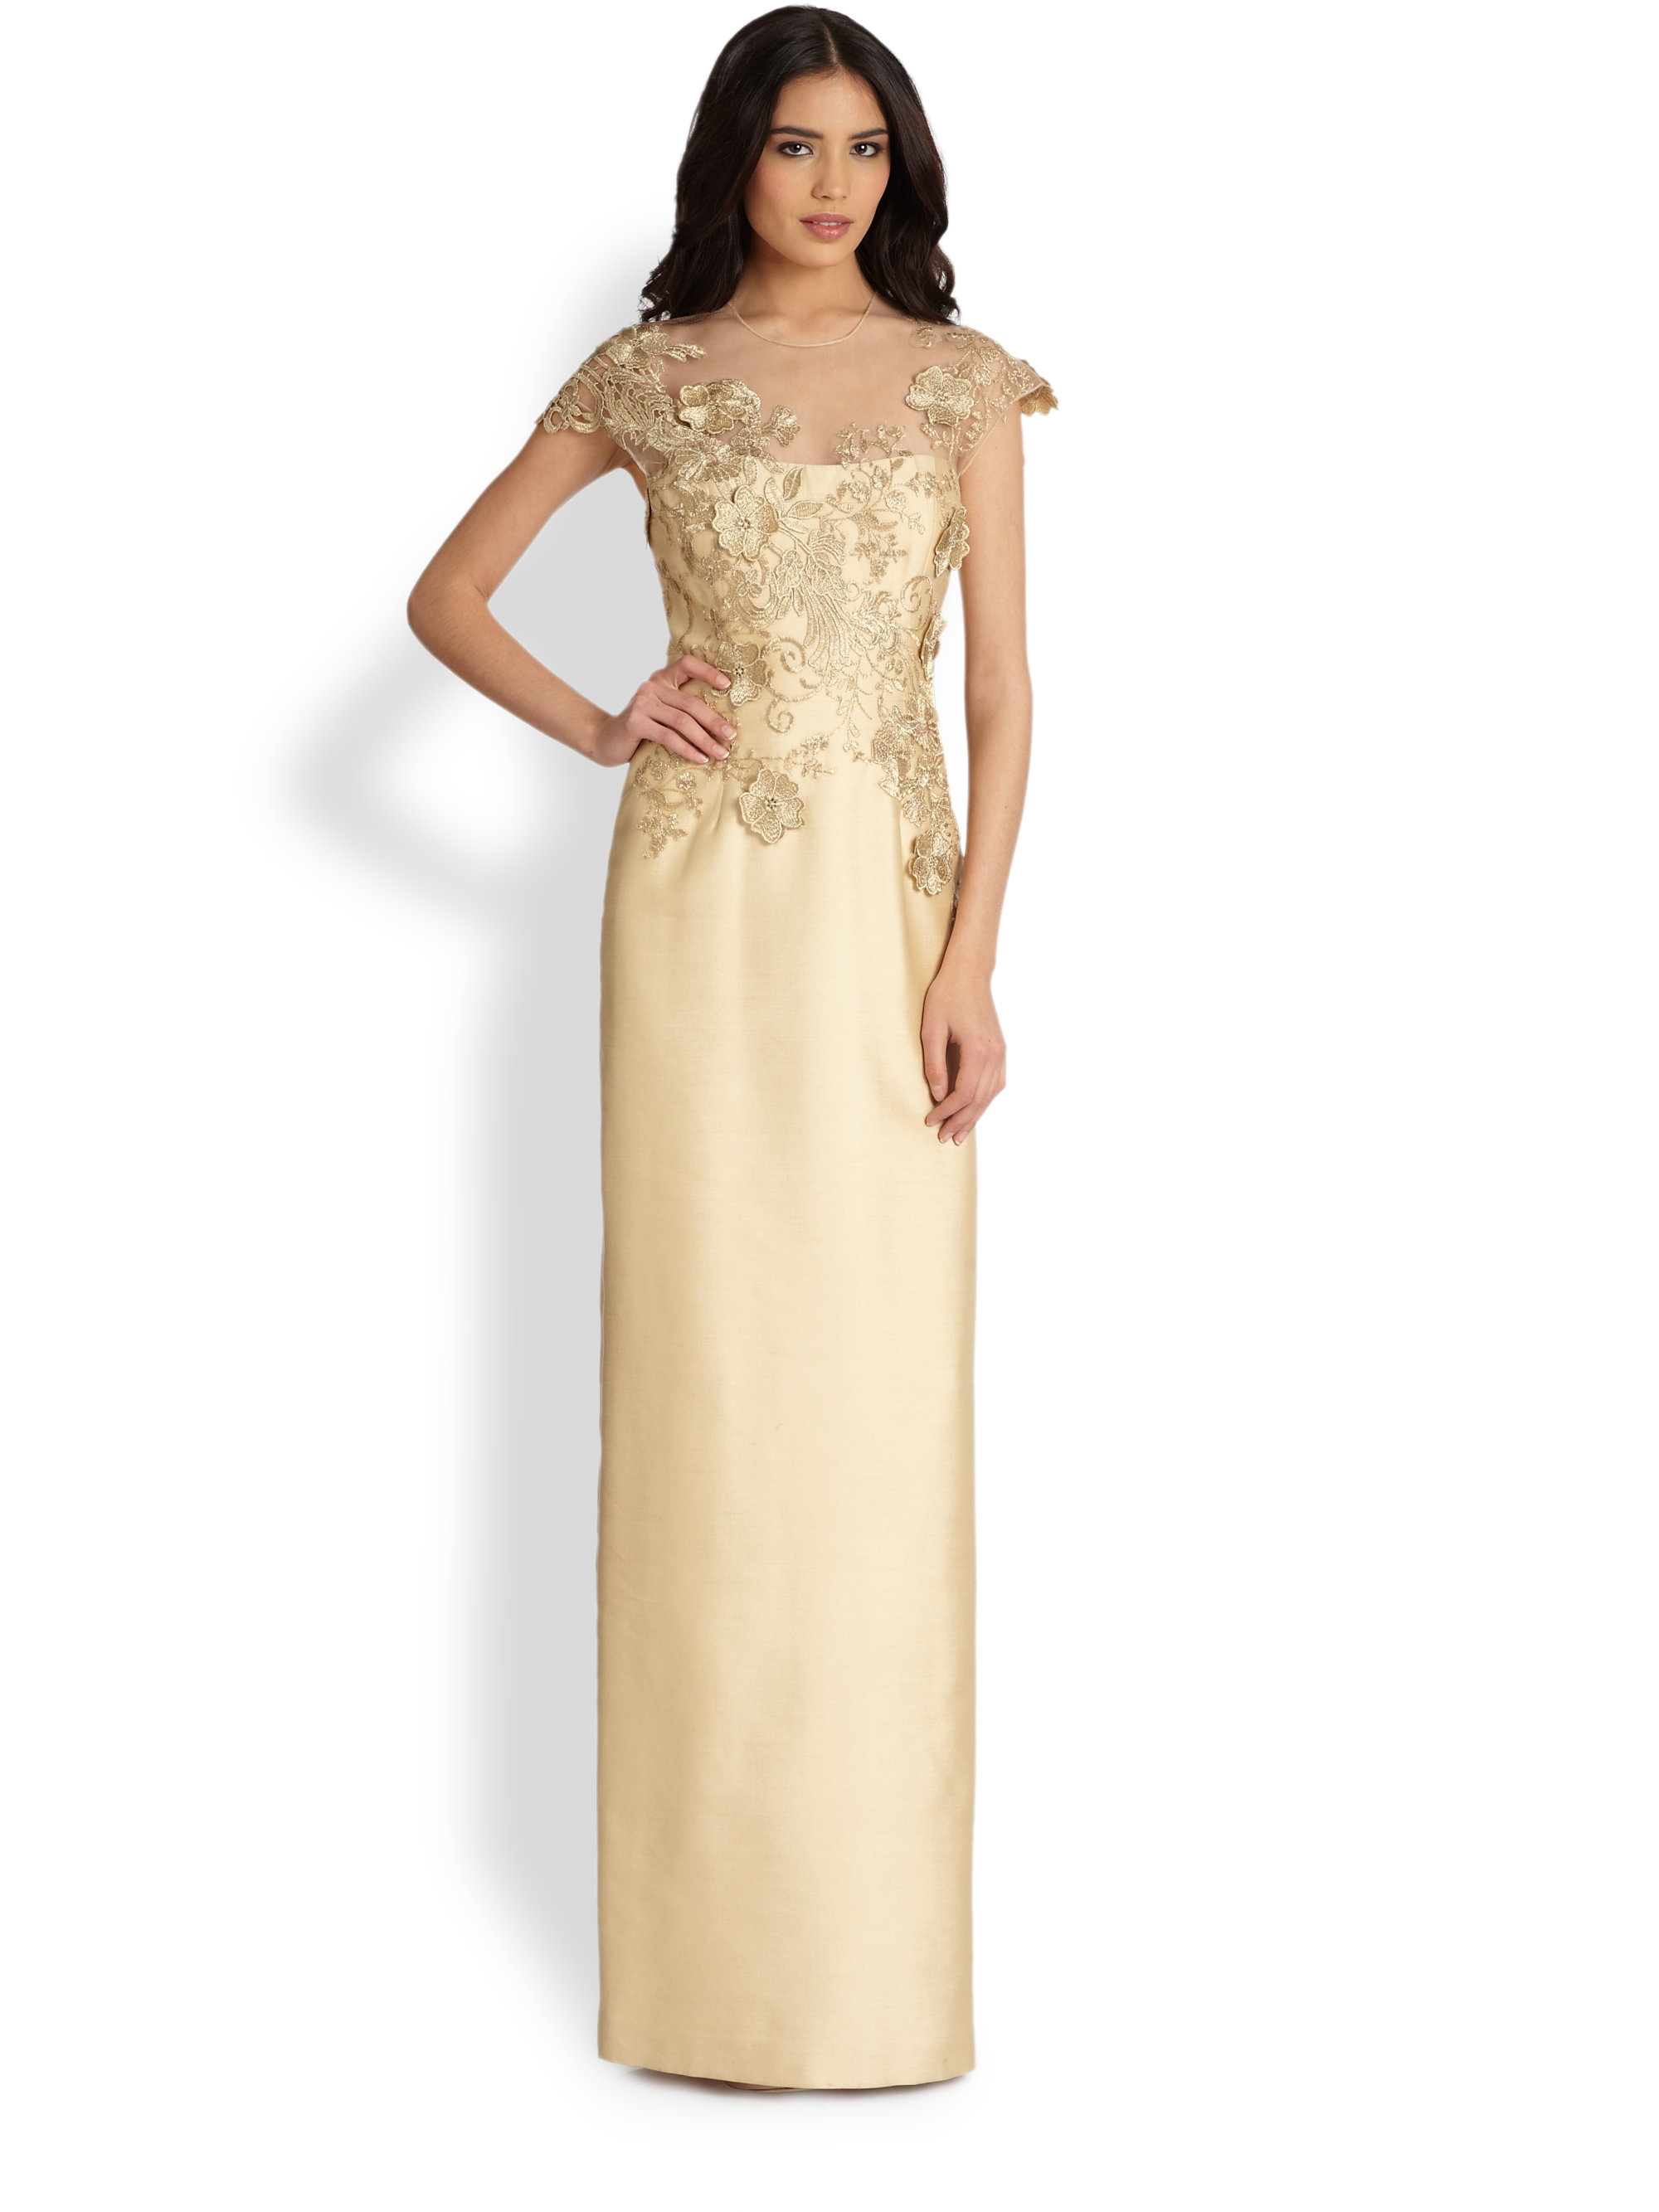 Saks Fifth Avenue Evening Dresses – Fashion dresses